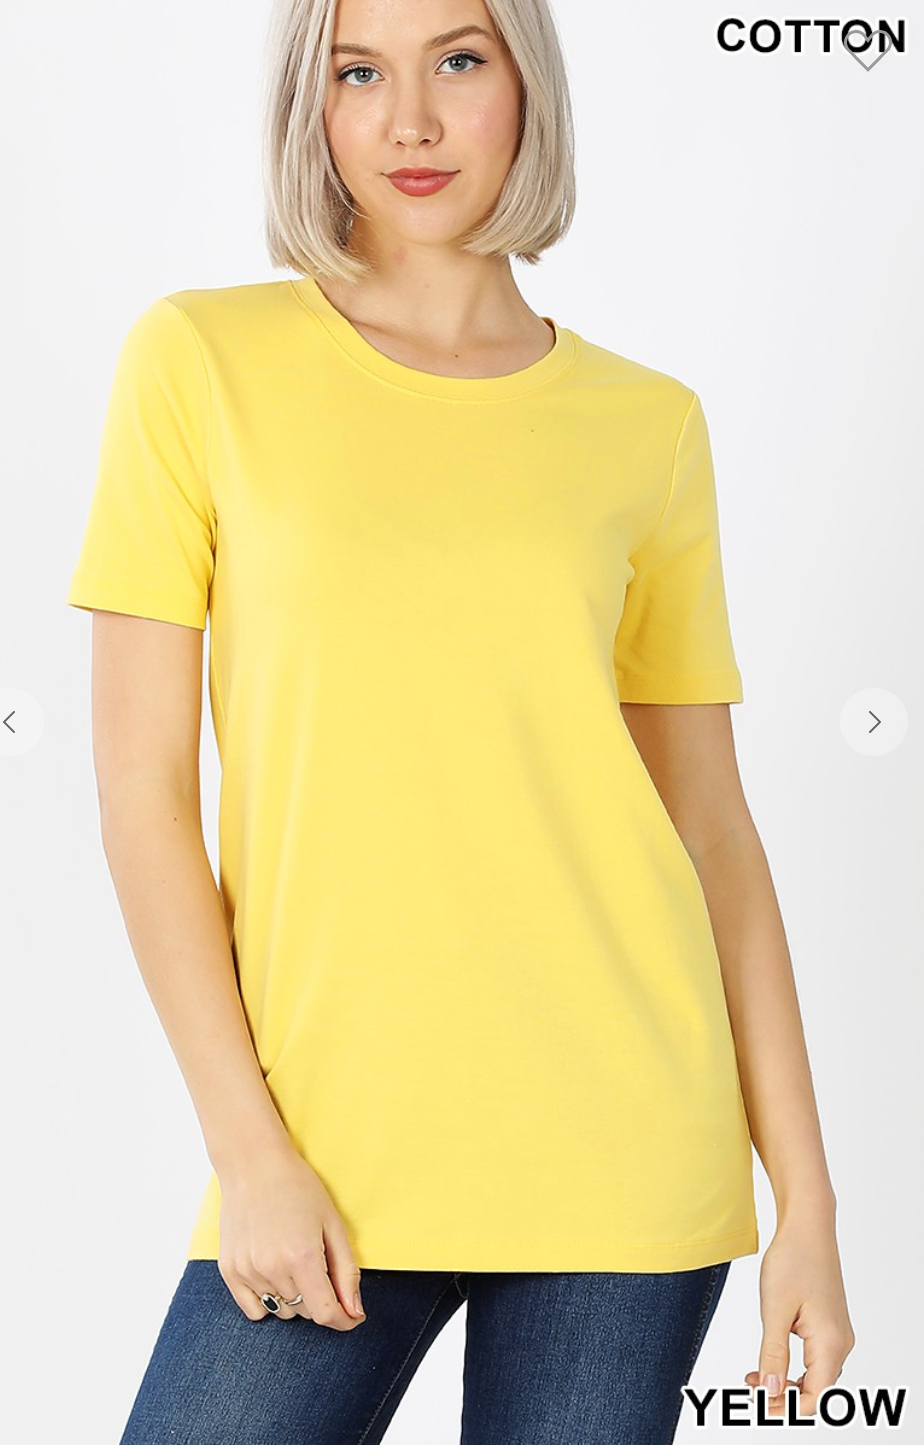 Cotton Crew Tshirt yellow